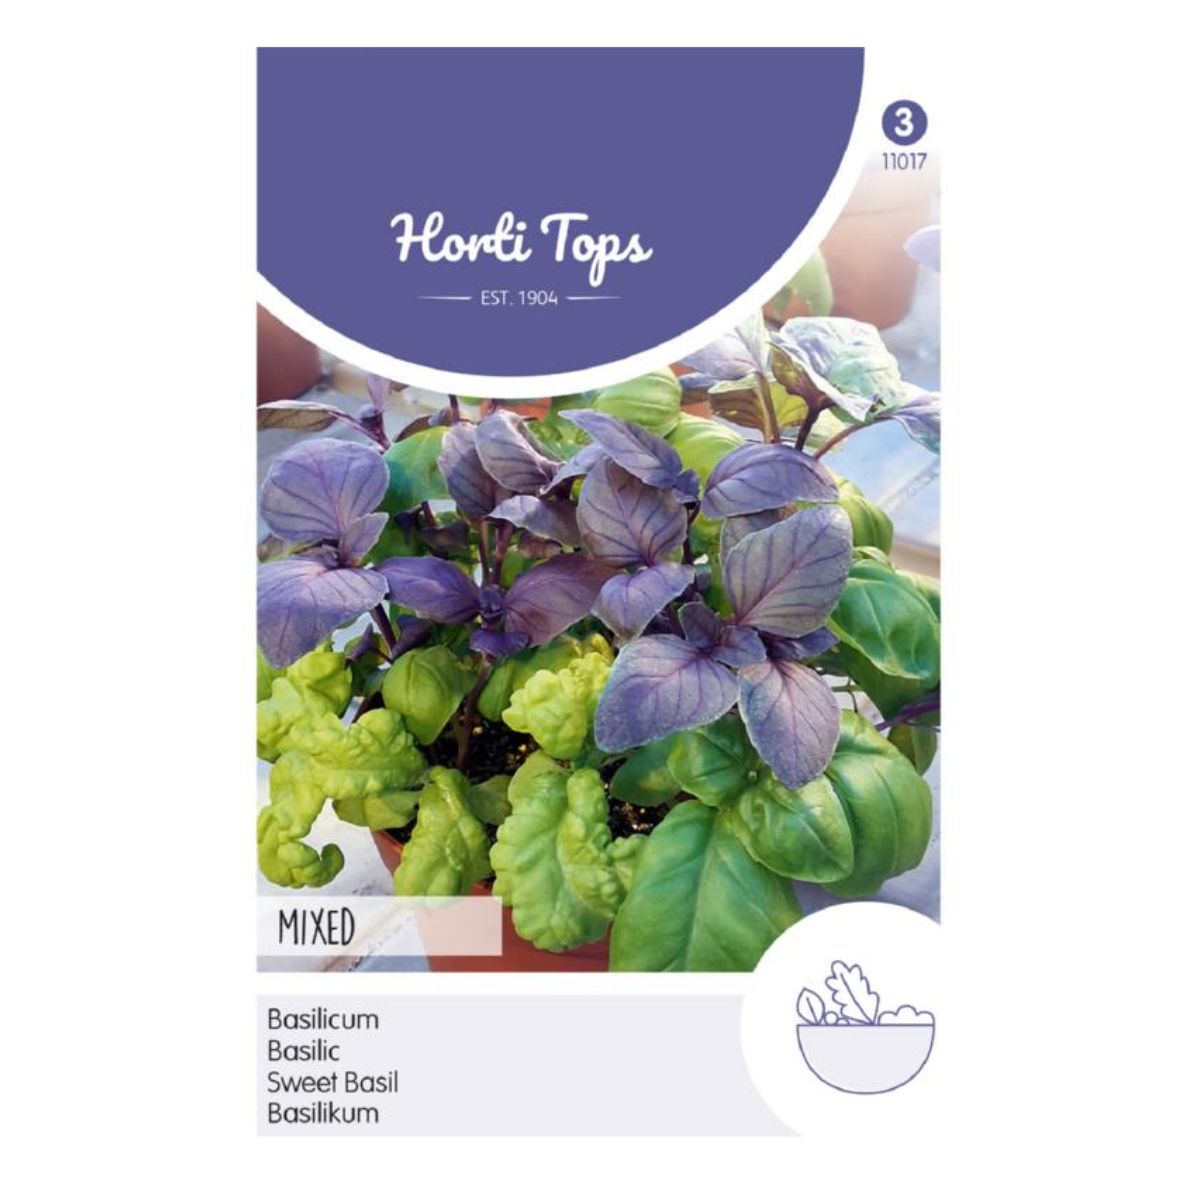 Seminte plante aromatice - Seminte busuioc MIX, 1,5 grame, Hortitops, hectarul.ro